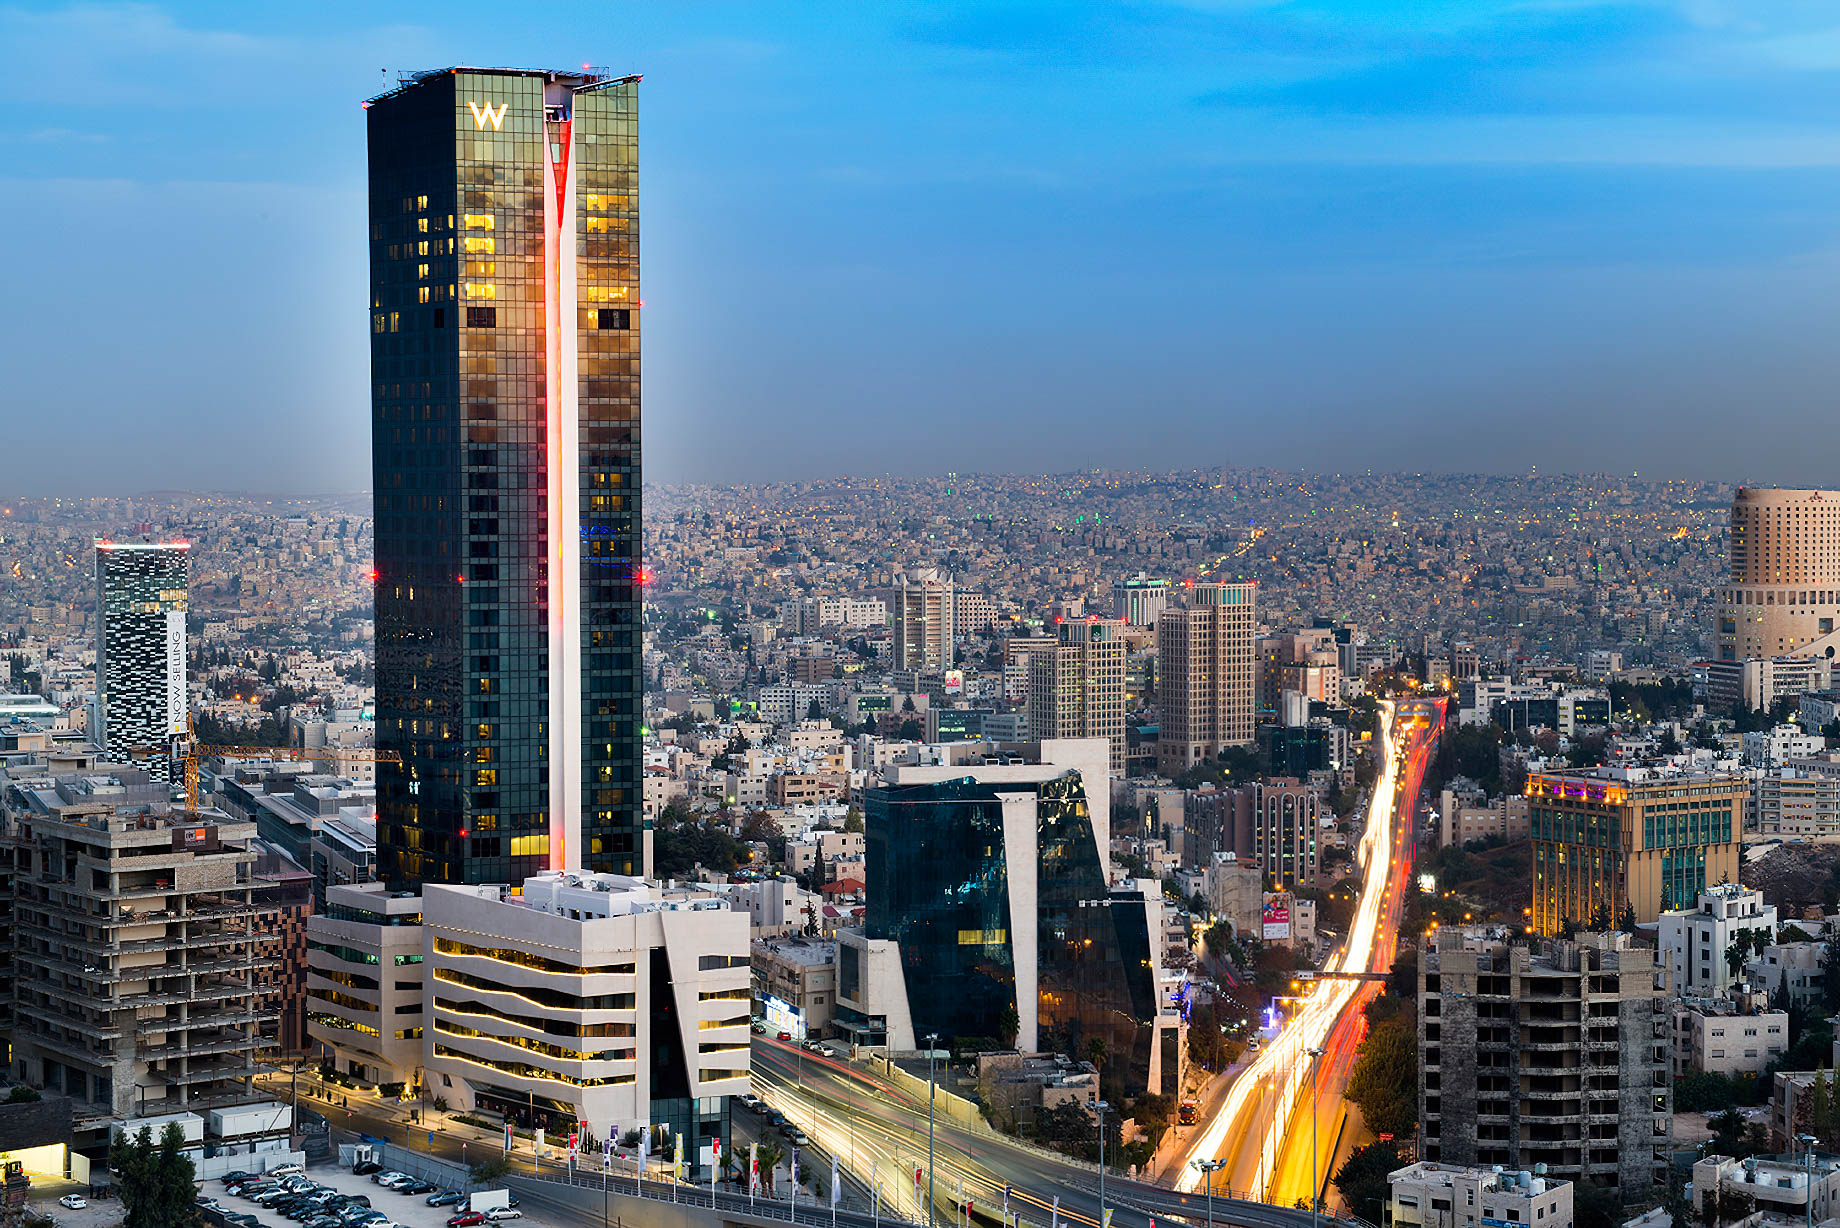 W Amman Hotel - Amman, Jordan - Hotel Tower Exterior Sunset